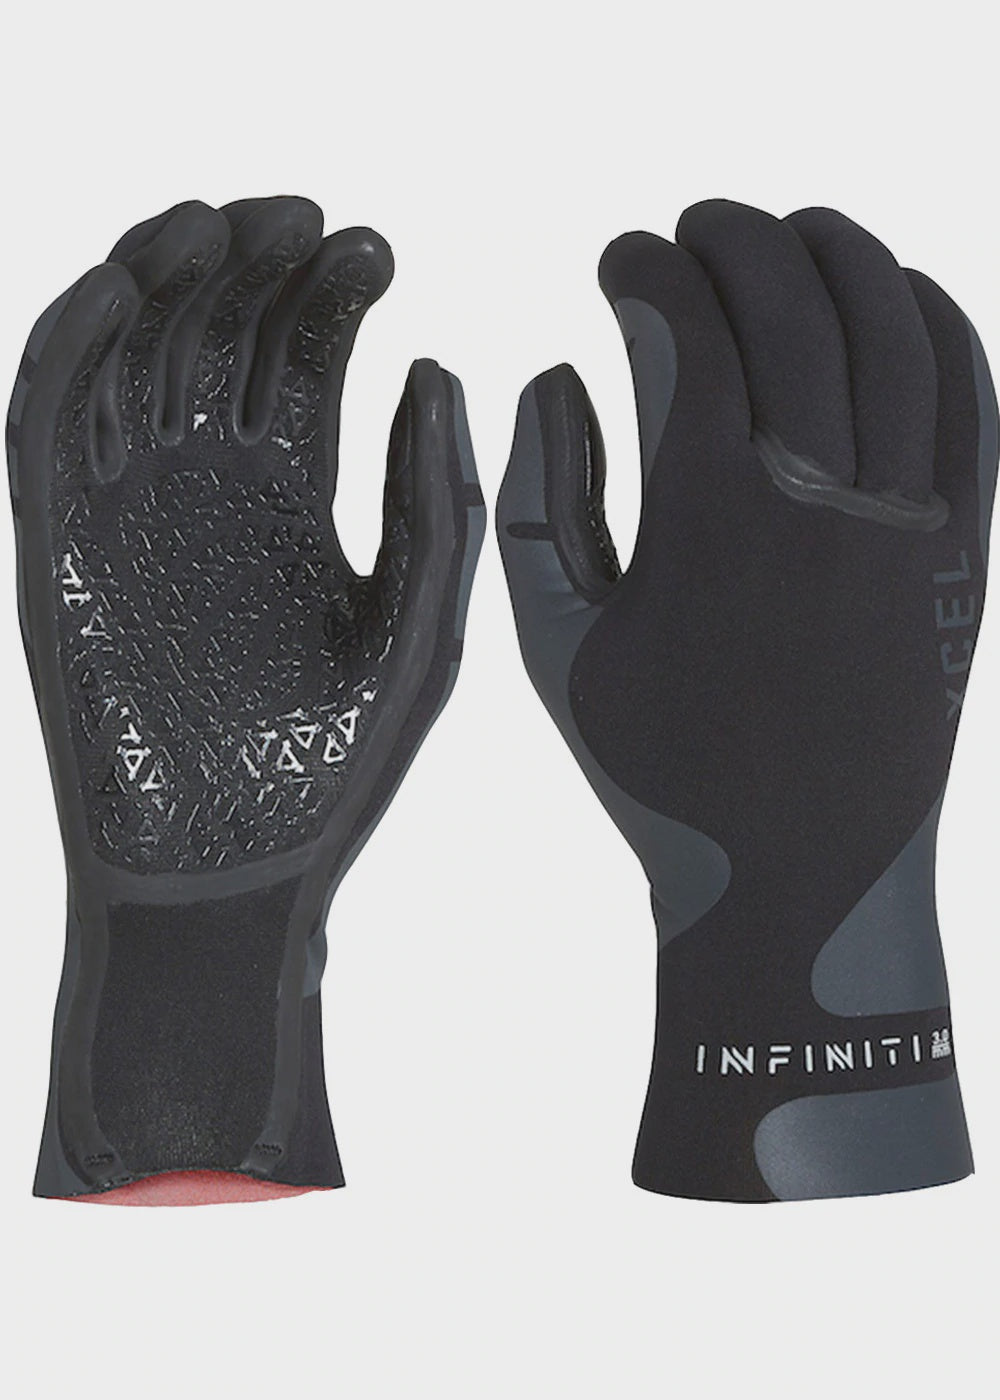 Xcel 3mm Infinity Glove BLACK